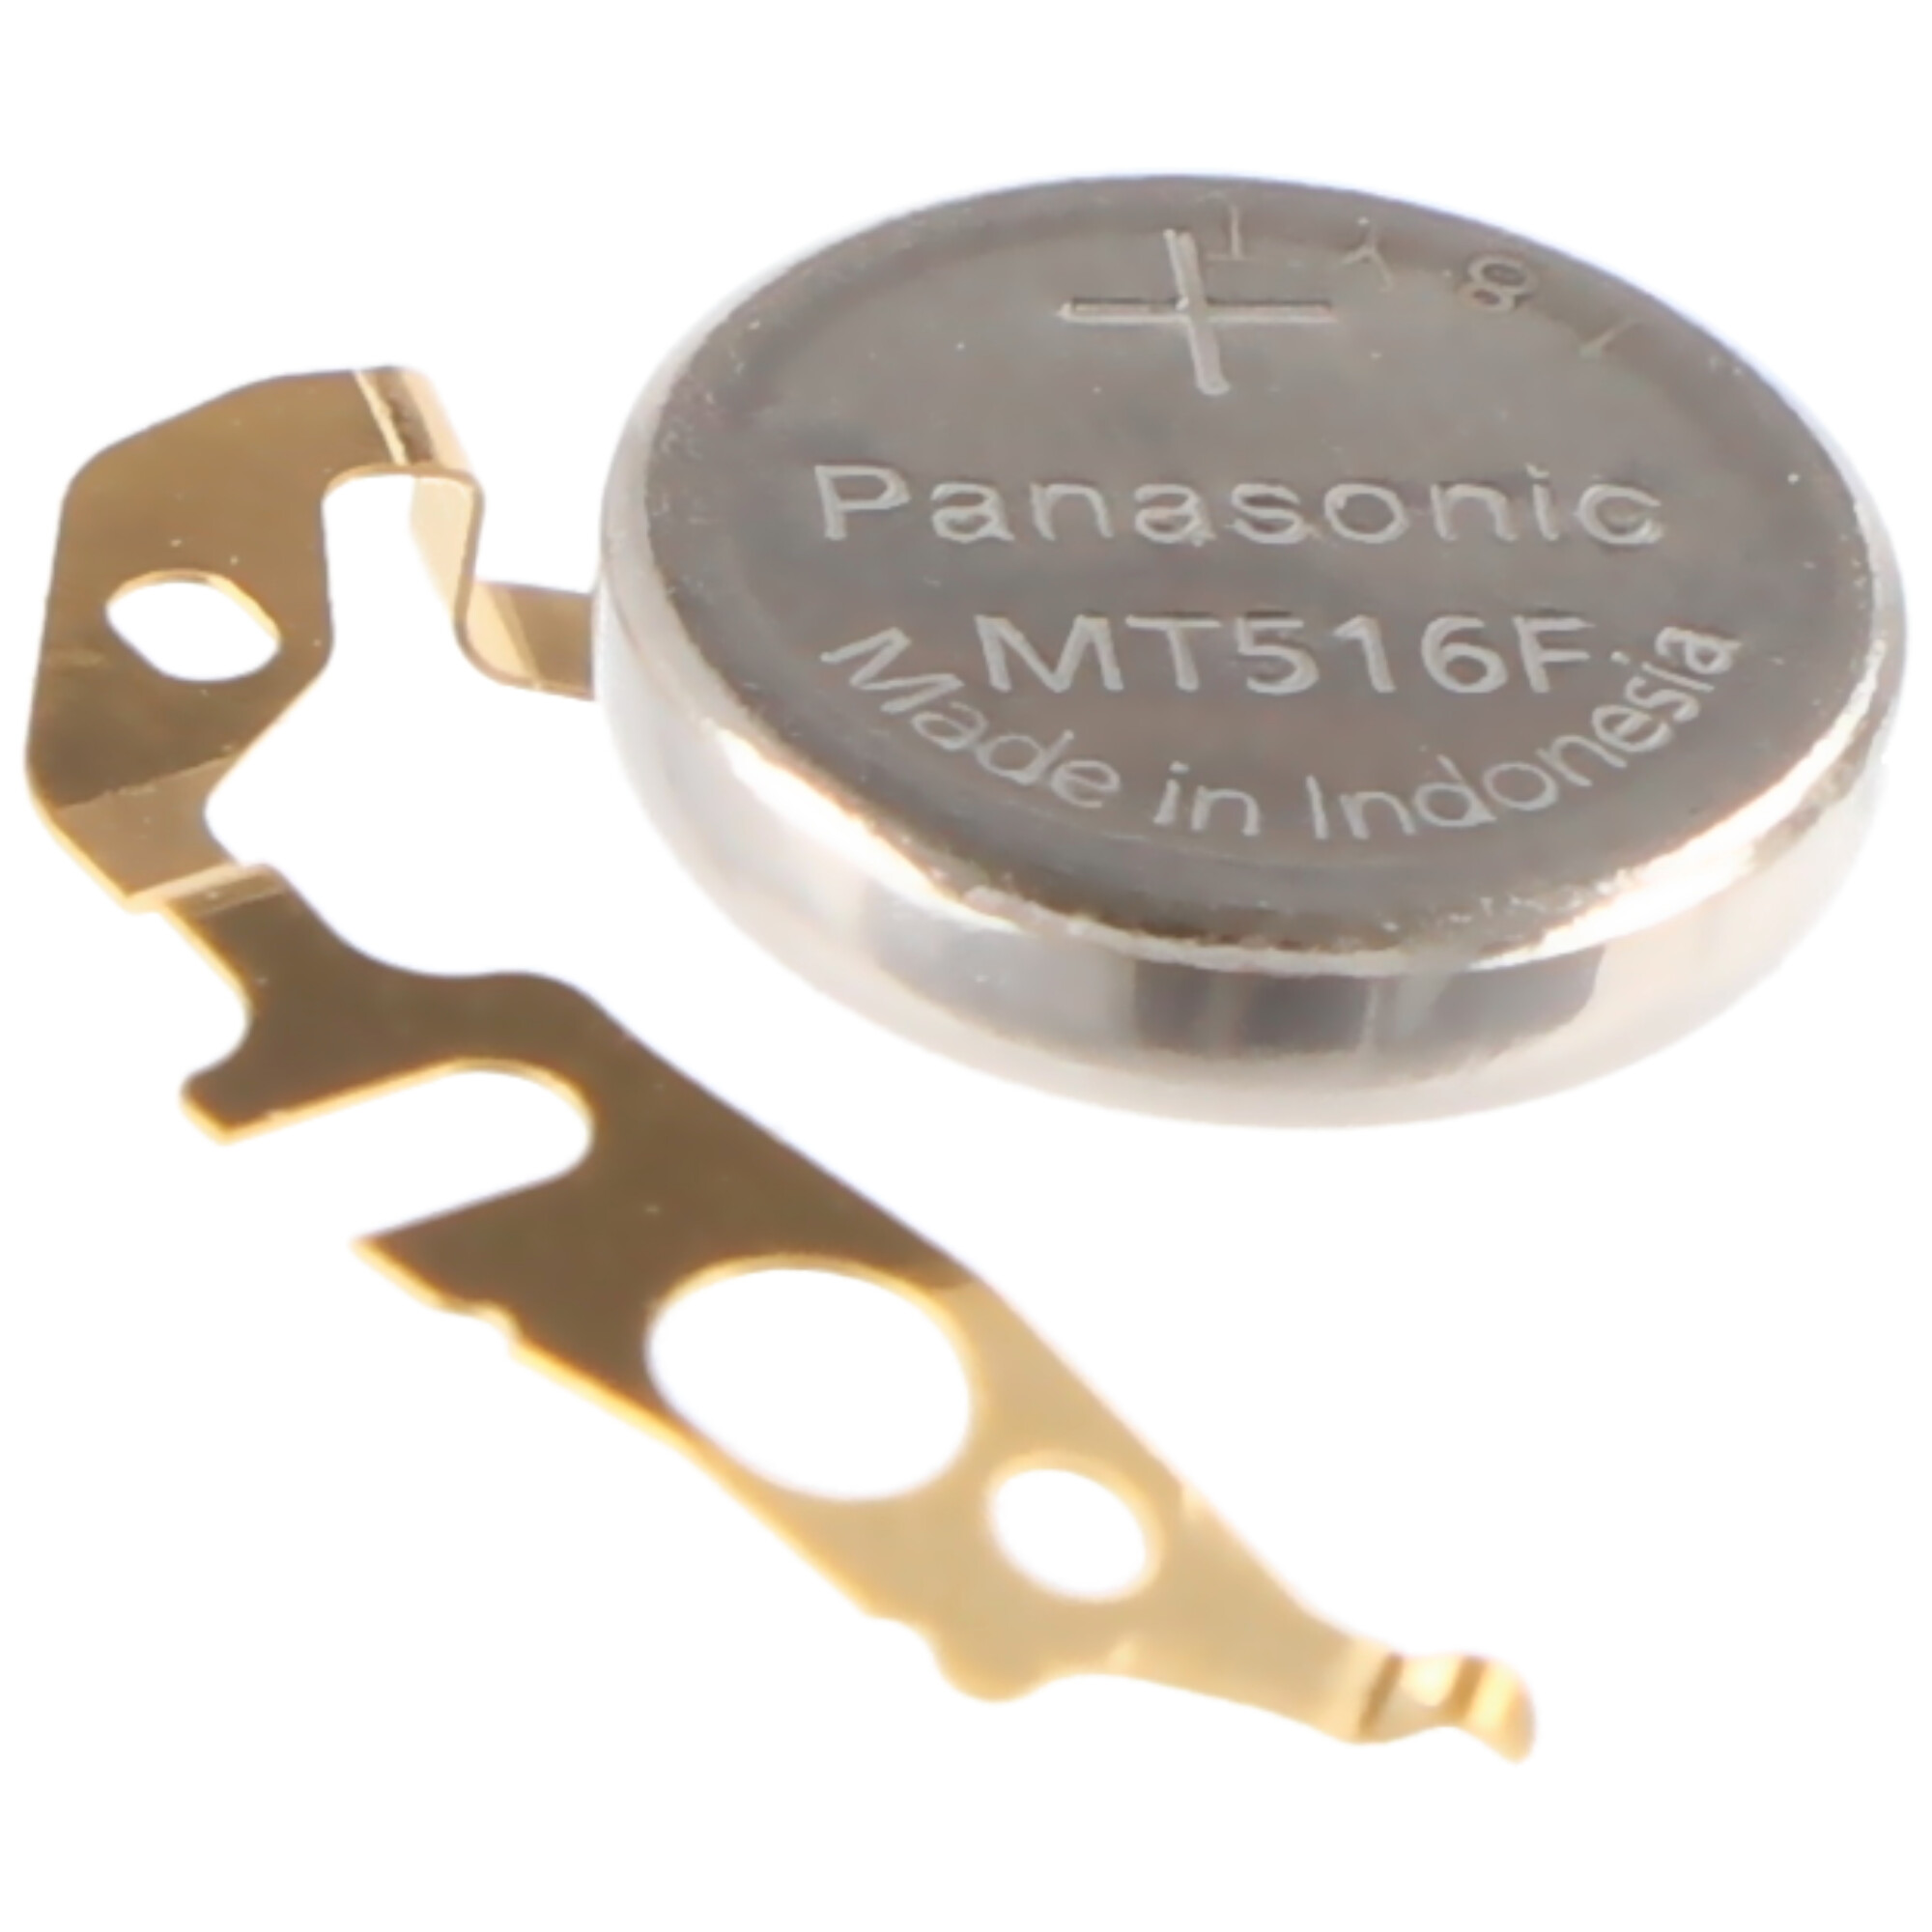 Panasonic MT516F Seiko Kondensator 3029-011, 3027-3MZ, MT516 passend für Seiko Kaliber 3M21, 30273MY